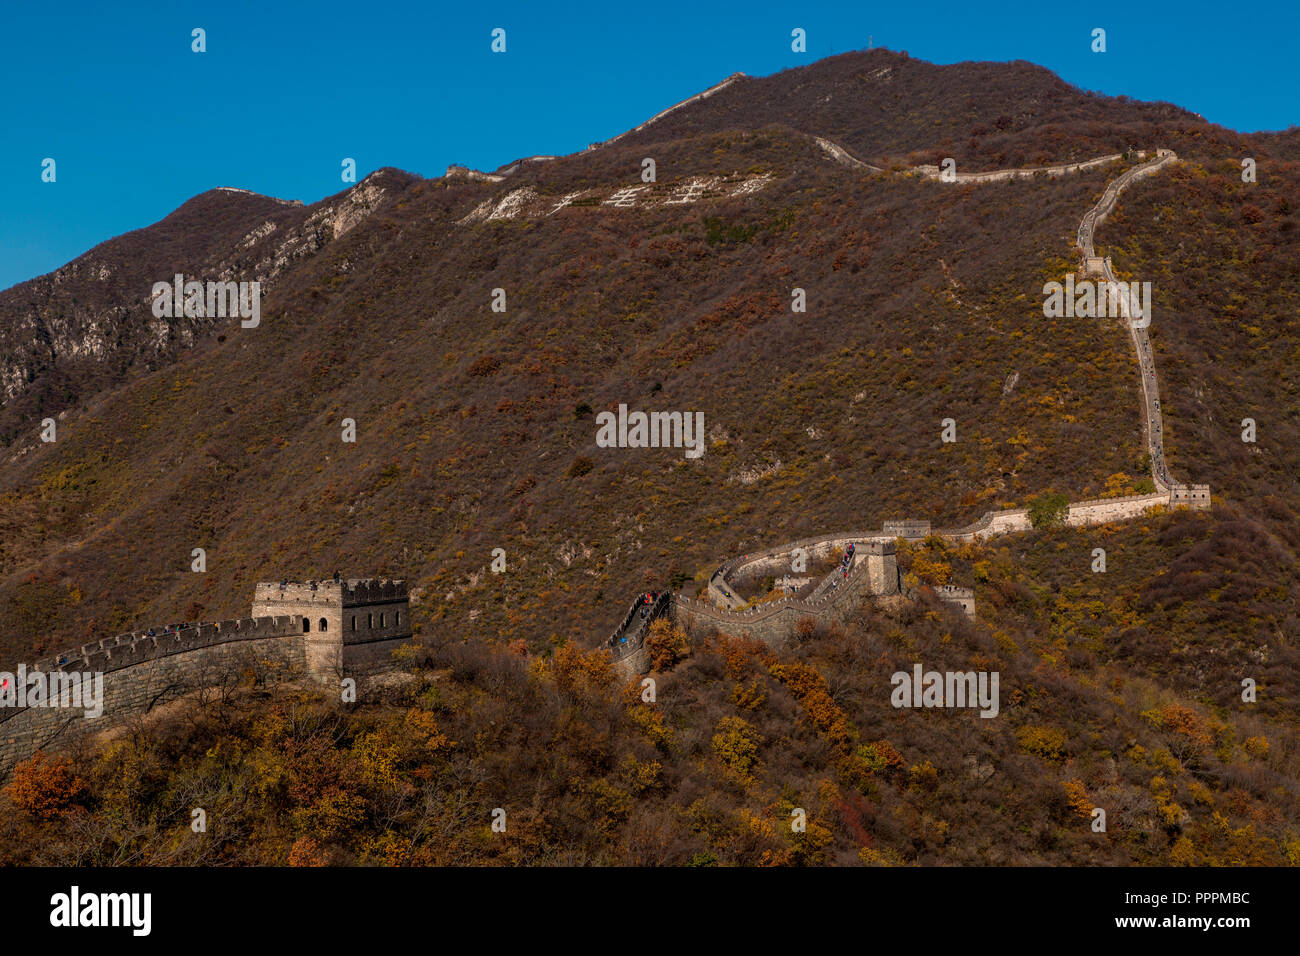 Great chinese wall, Mutianyu, Beijing Shi, China Stock Photo